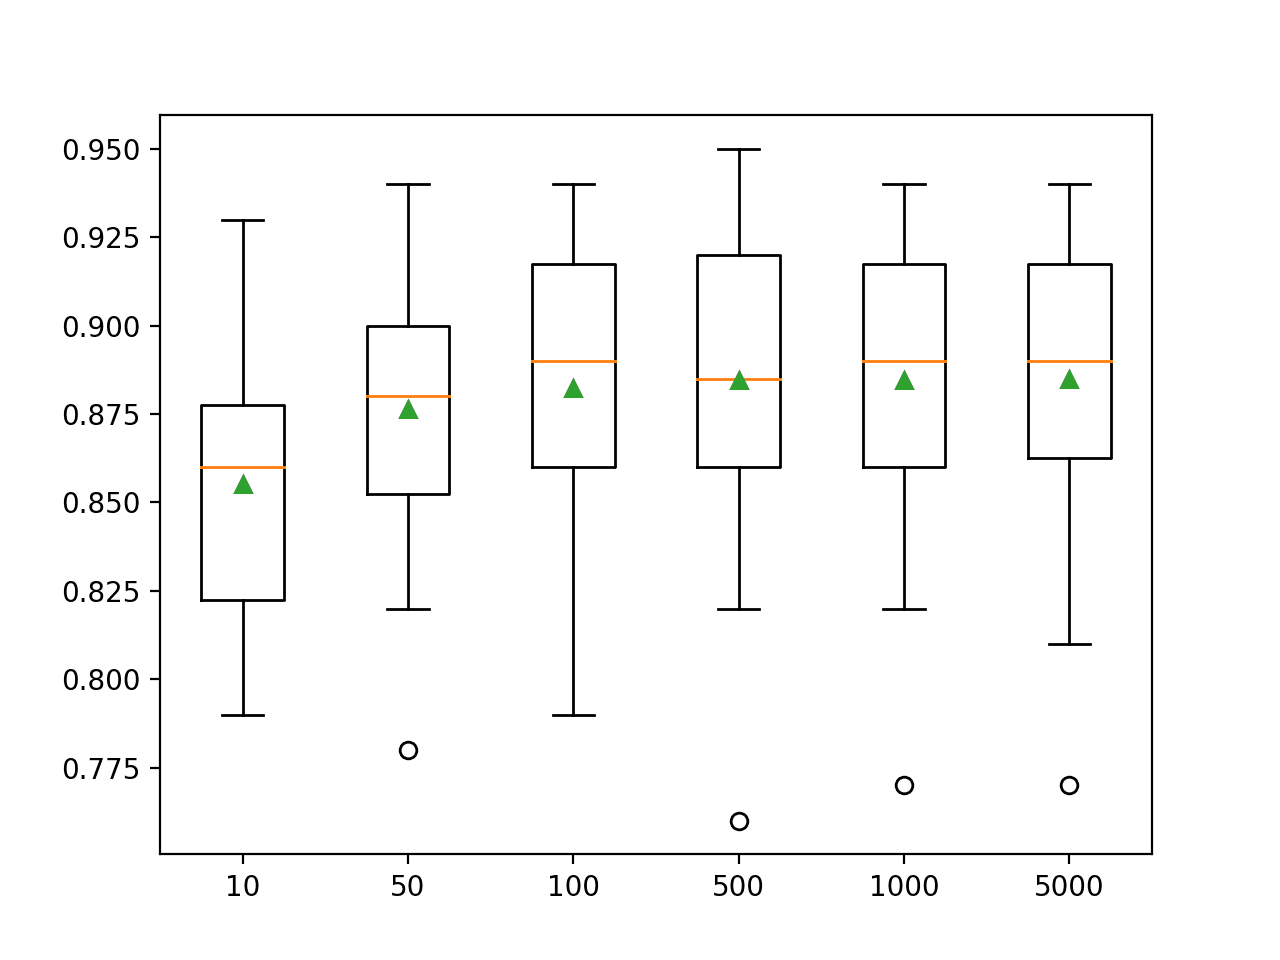 Box Plot of Bagging Ensemble Size vs. Classification Accuracy